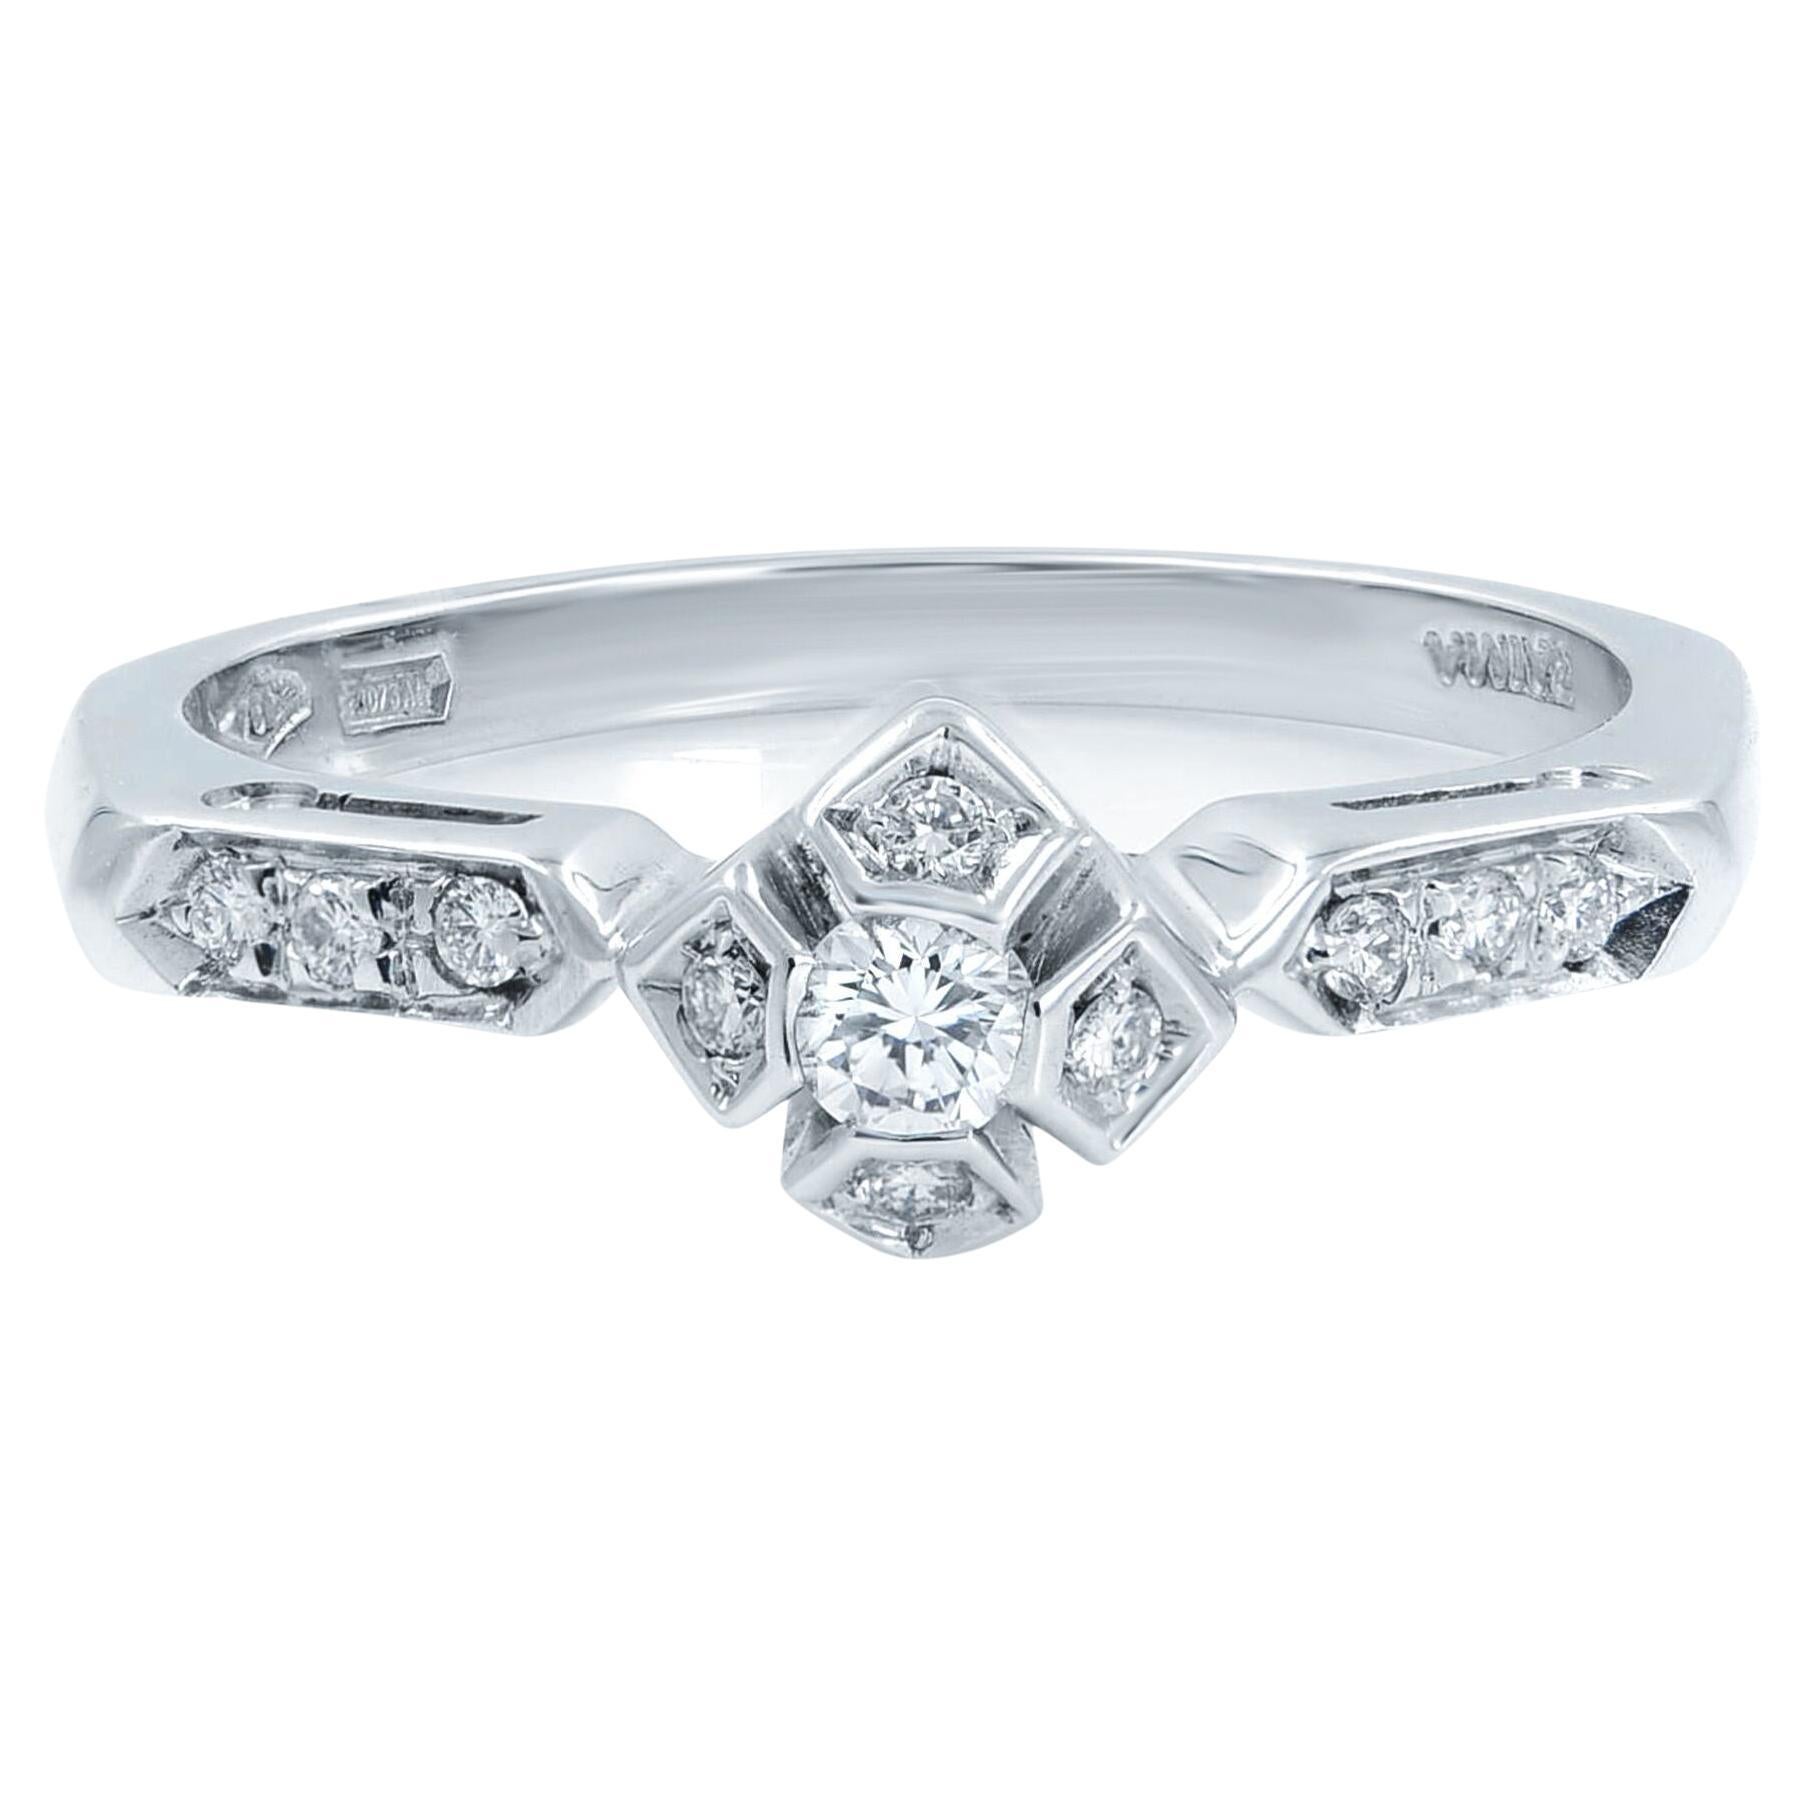 Rachel Koen Diamond Accented Ladies Engagement Ring 18K White Gold 0.18Cttw For Sale